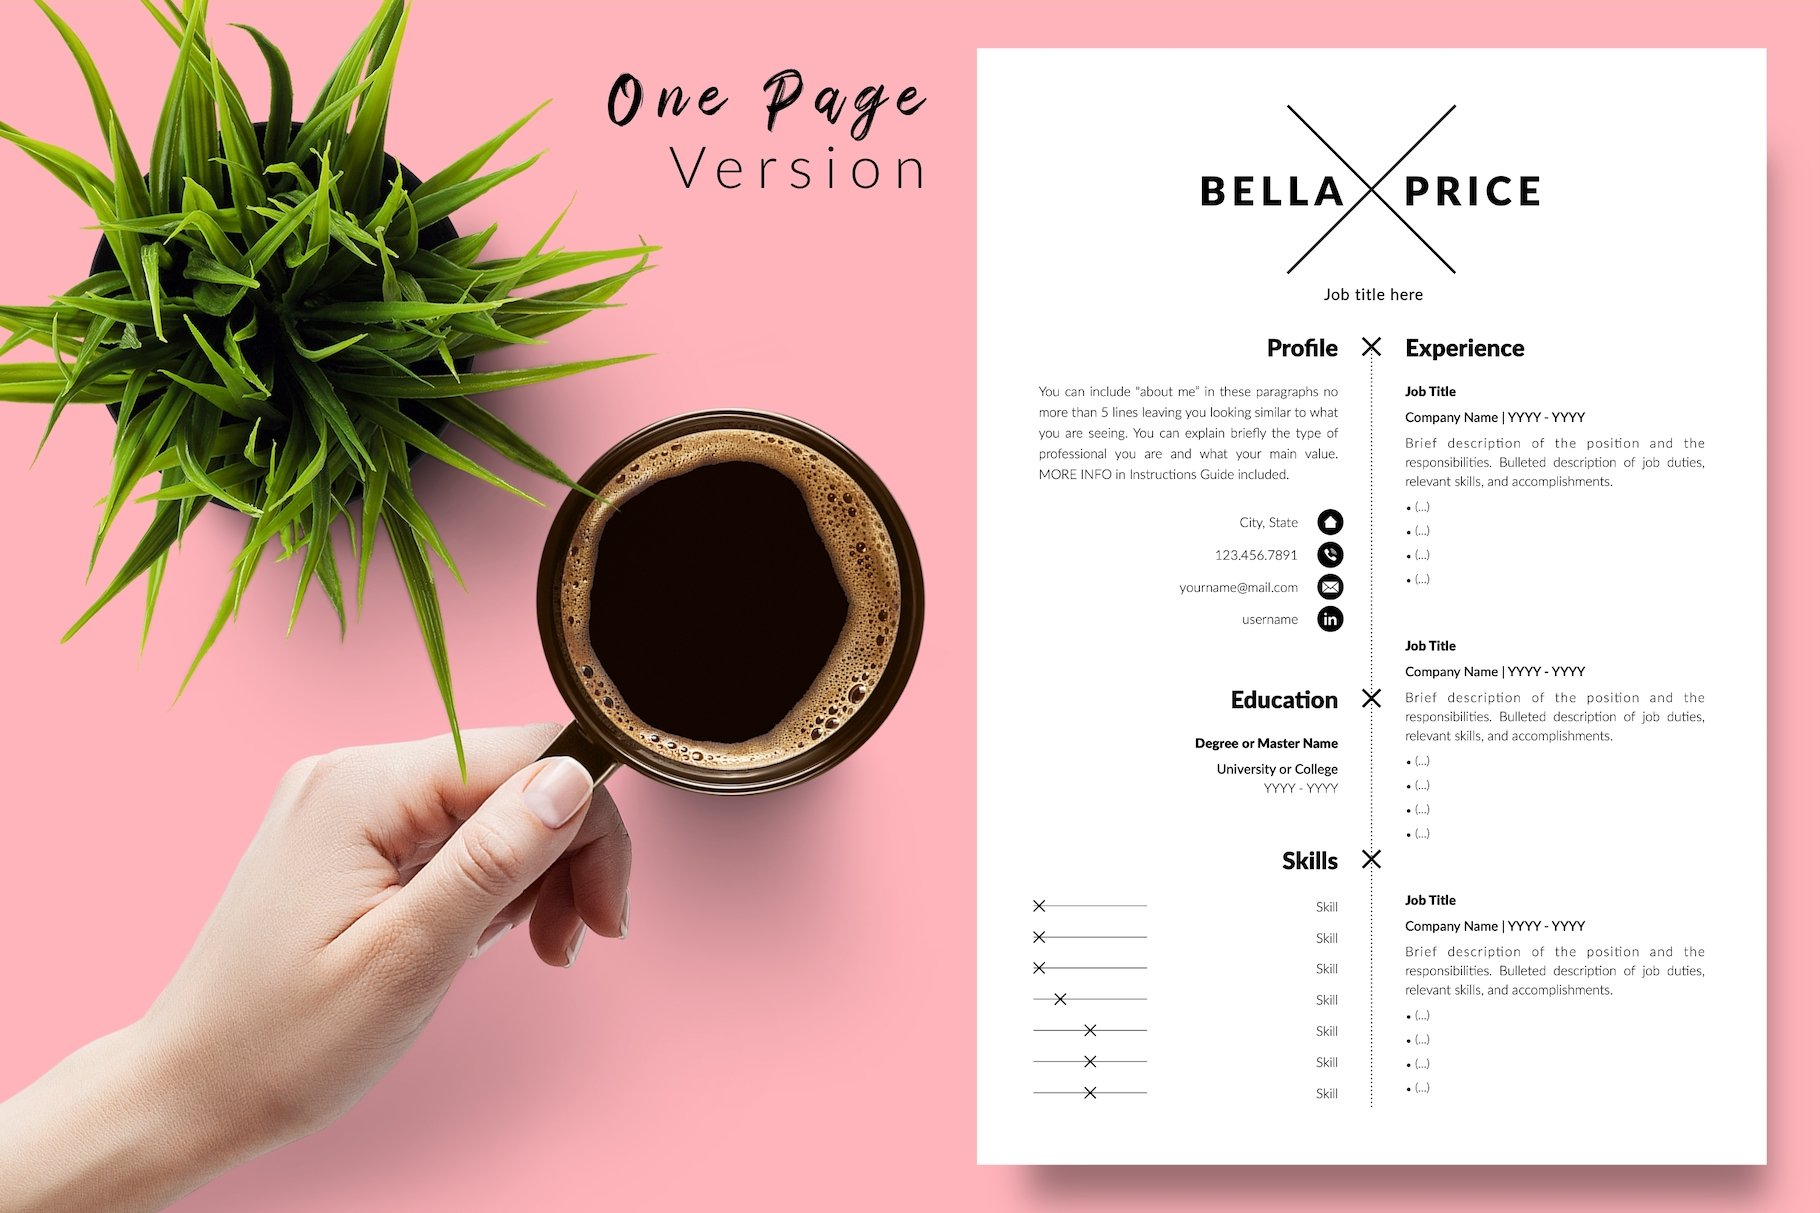 Simple CV Template / Resume - Bella preview image.